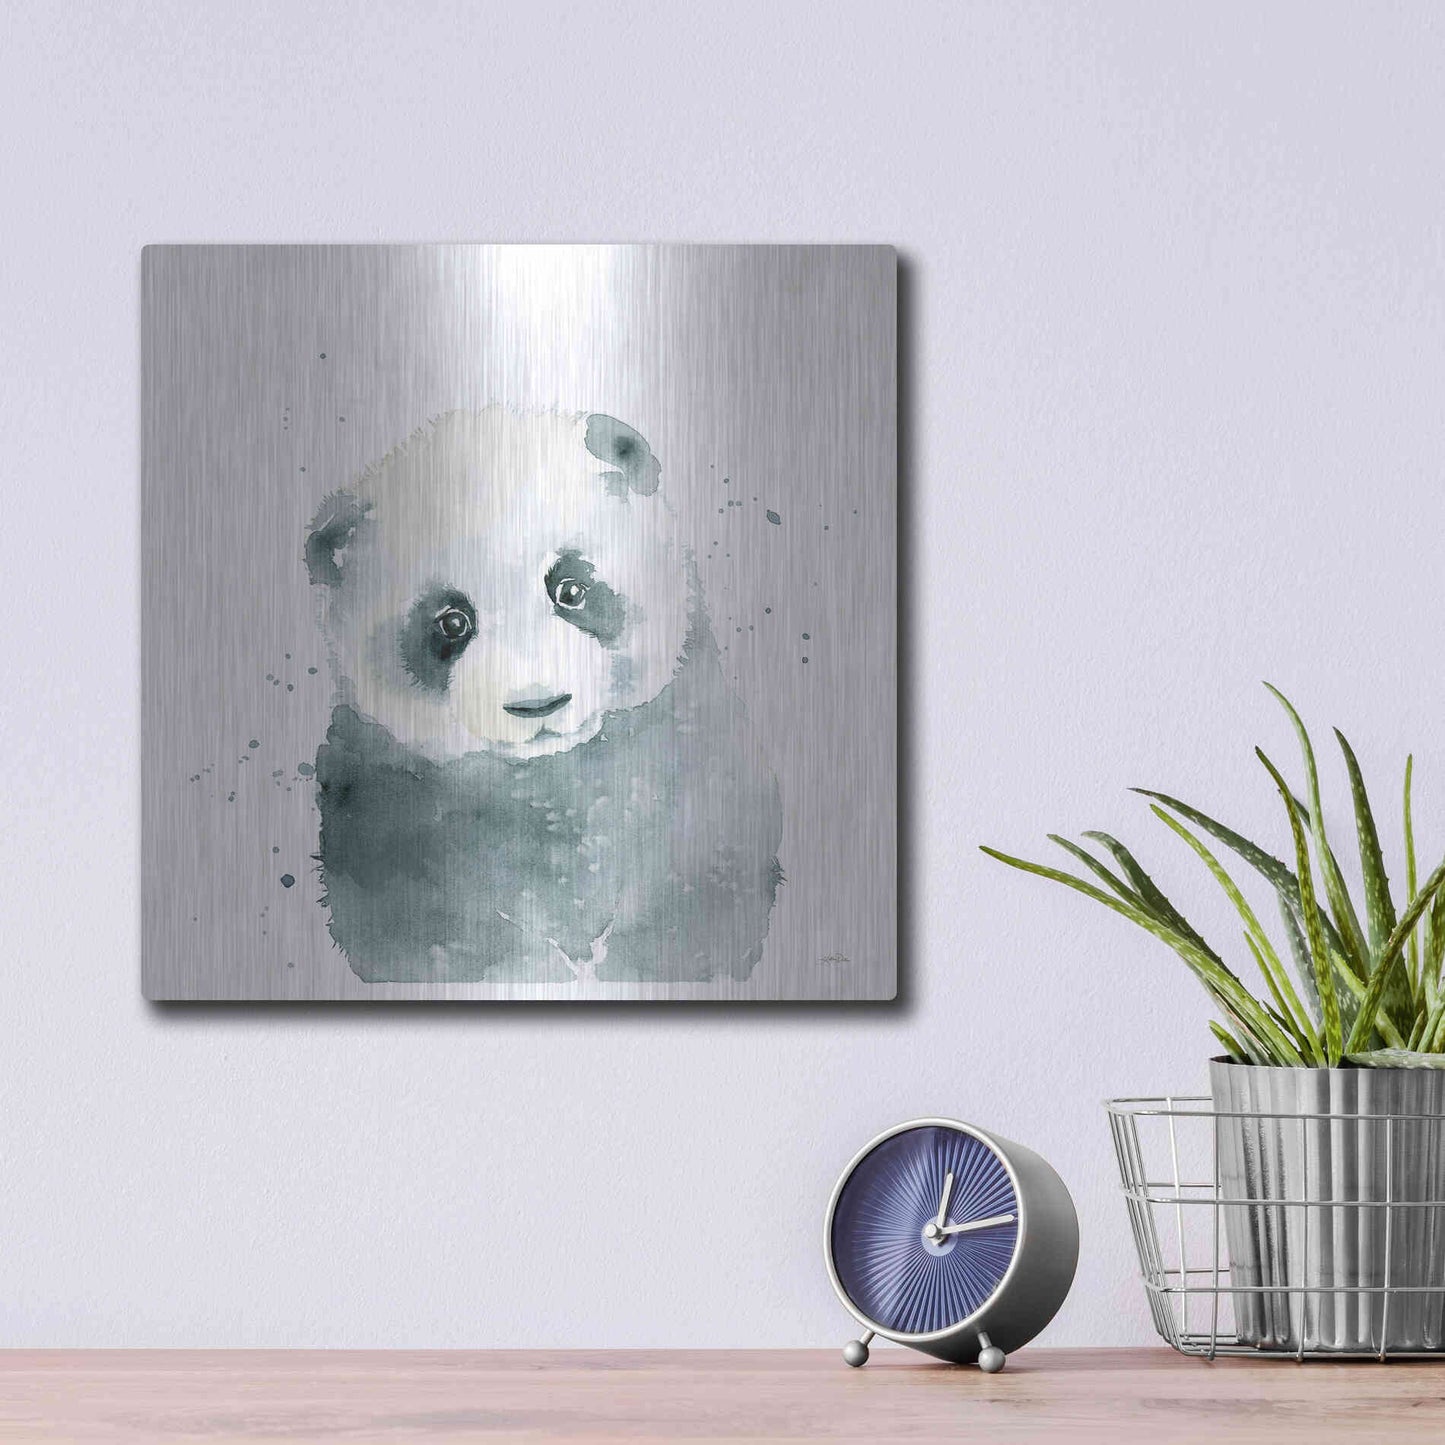 Luxe Metal Art 'Panda Cub' by Katrina Pete, Metal Wall Art,12x12